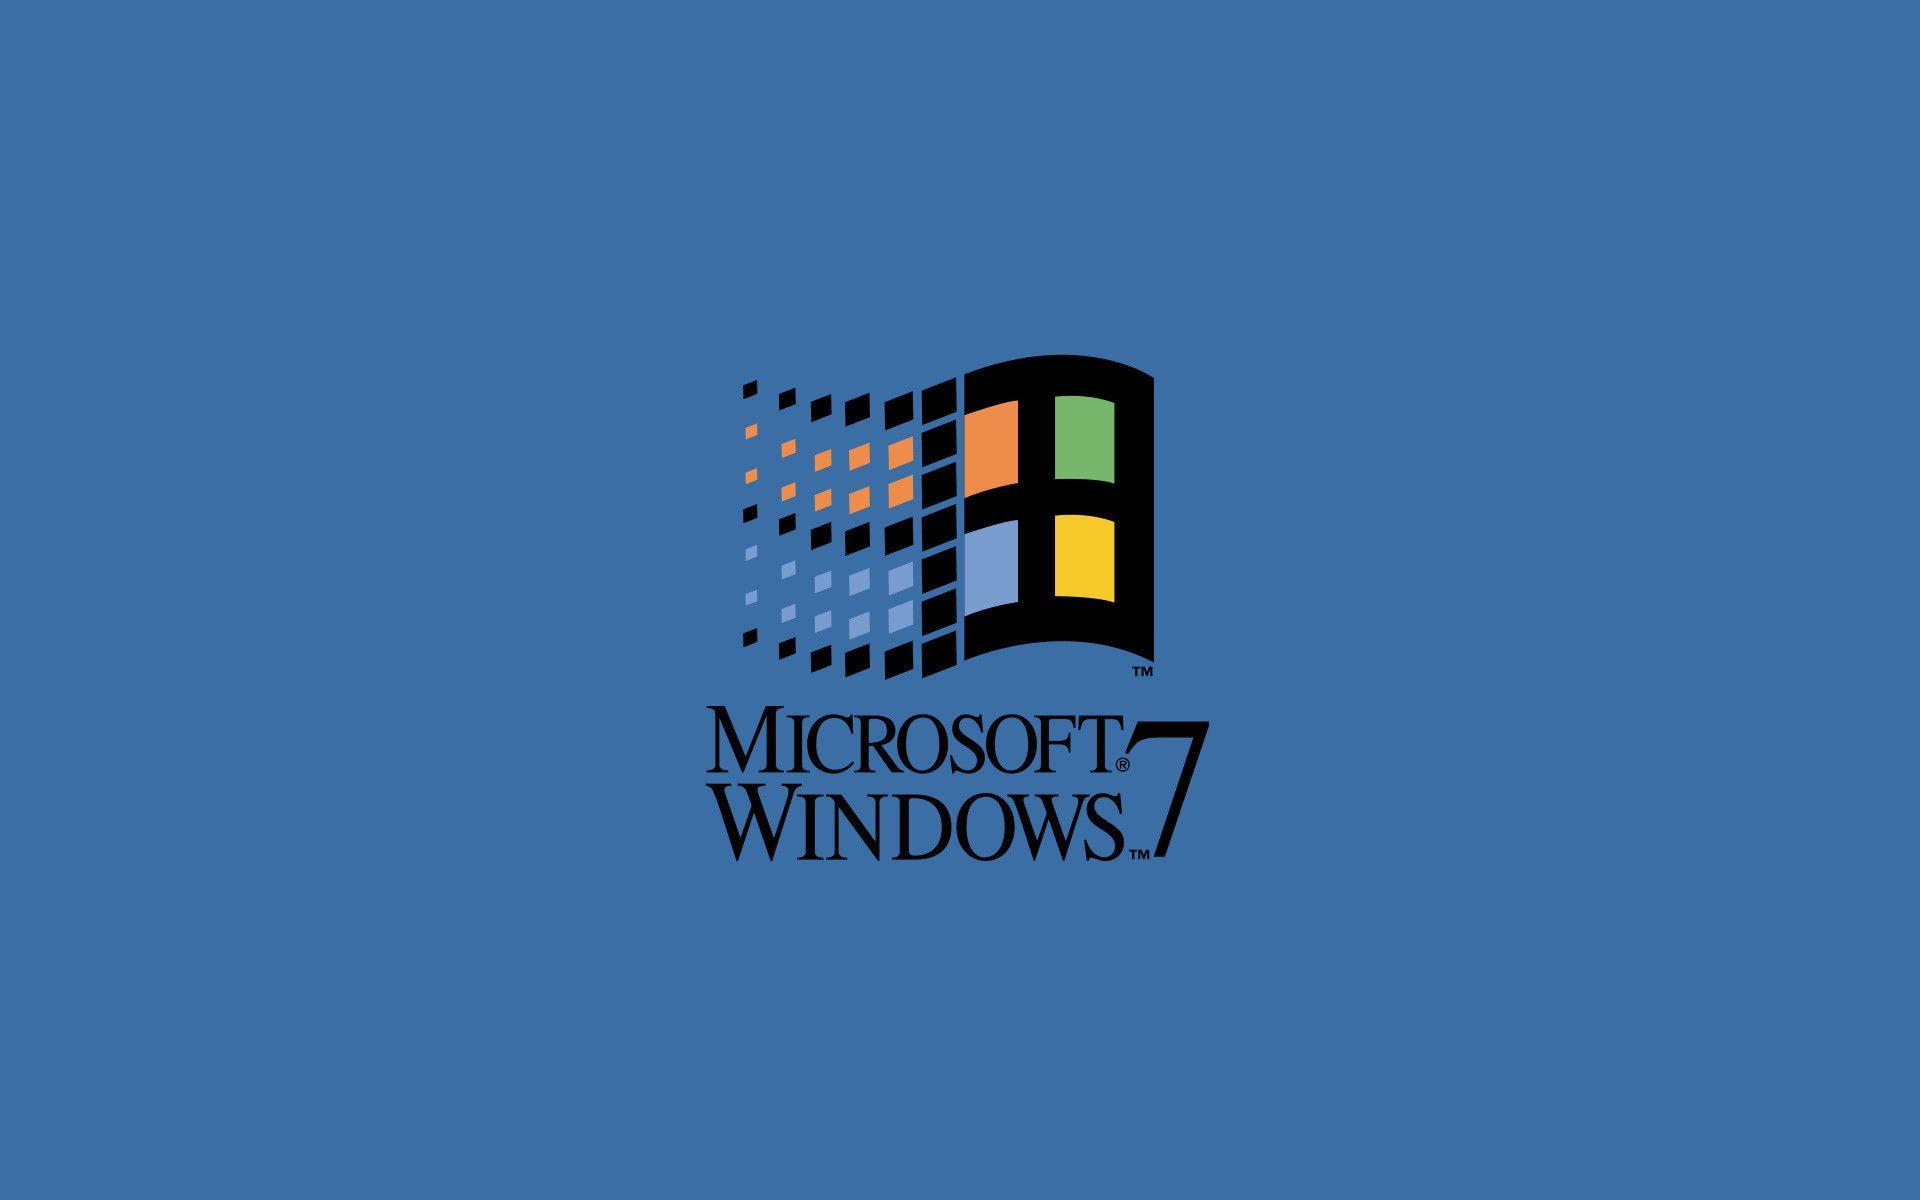 Microsoft Windows Me Logo - Windows Me Wallpaper (68+ images)